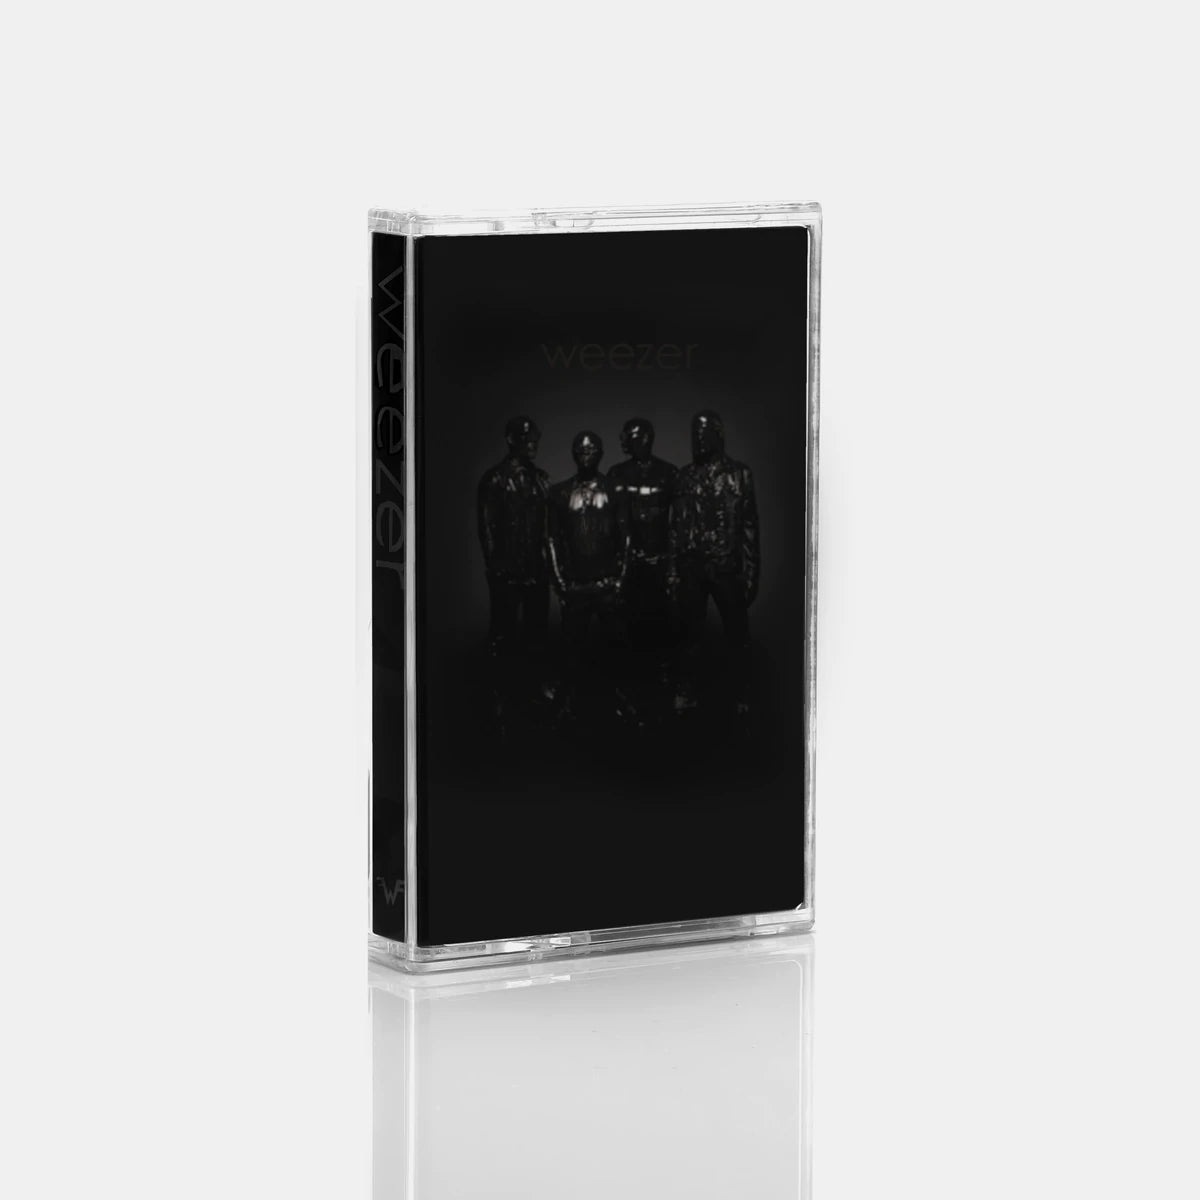 Weezer - The Black Album (Cassette)